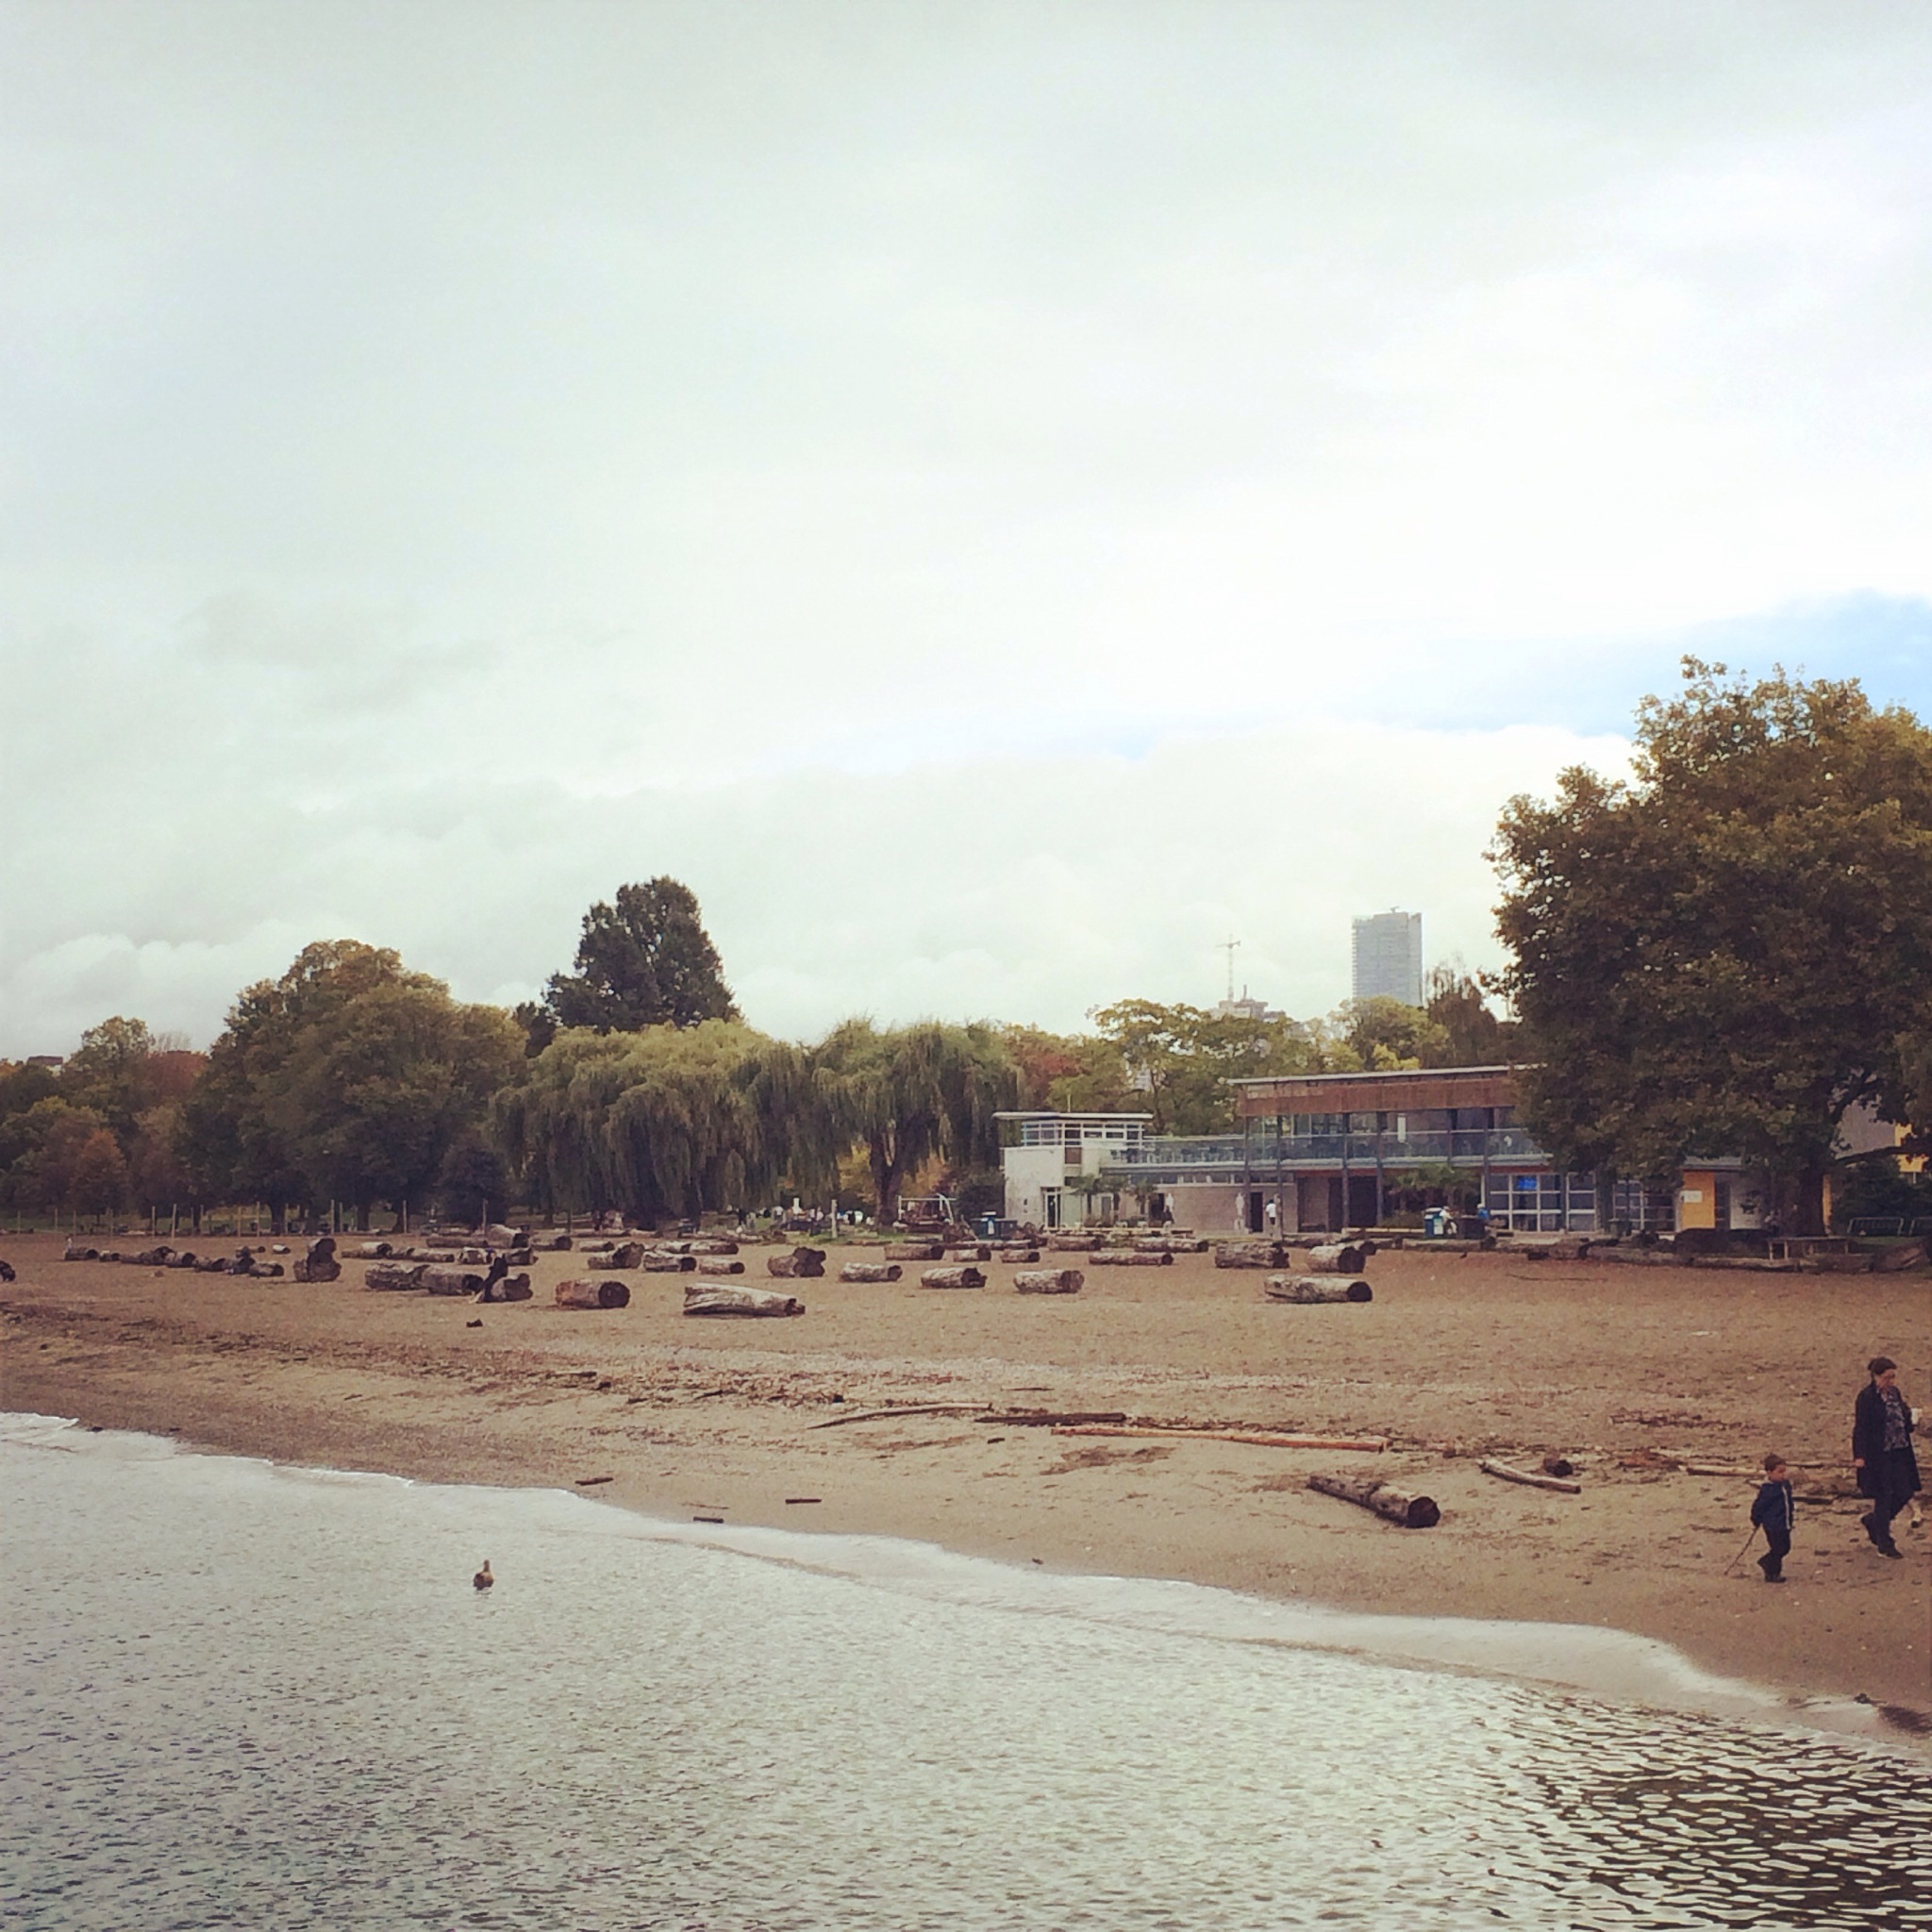 Kitsilano Beach, Vancouver, taken 11 October 2014